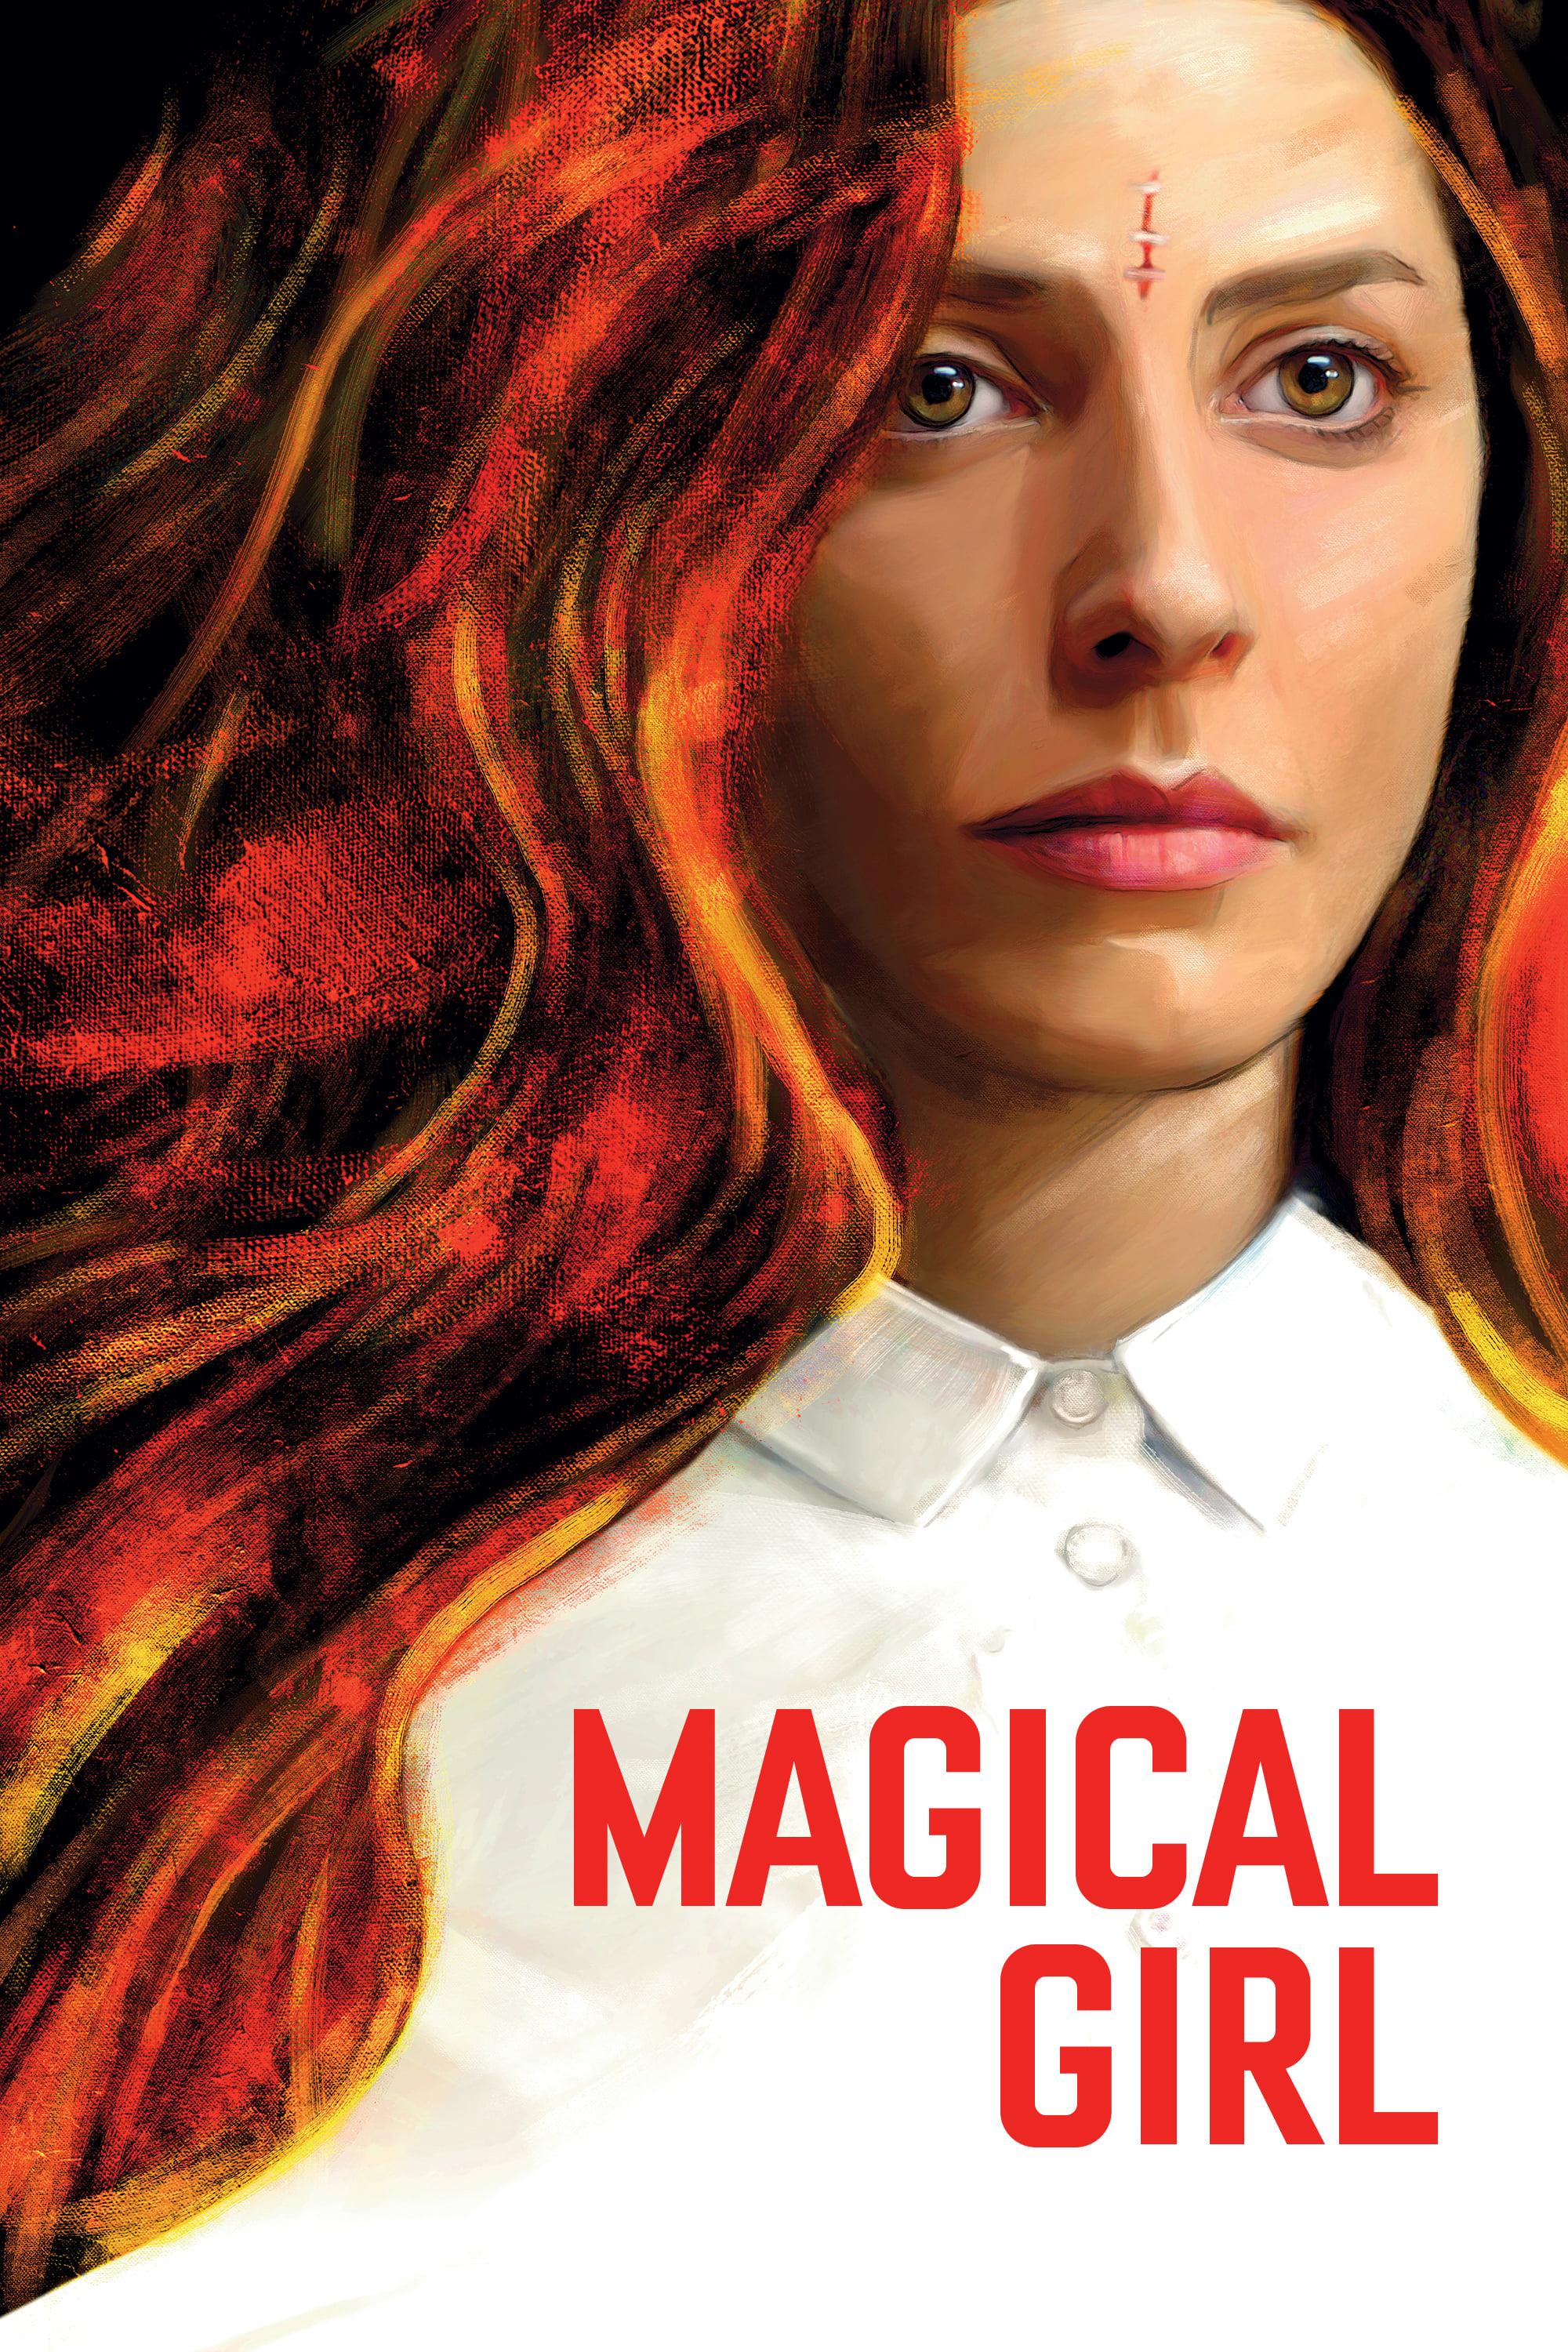 Magical Girl poster